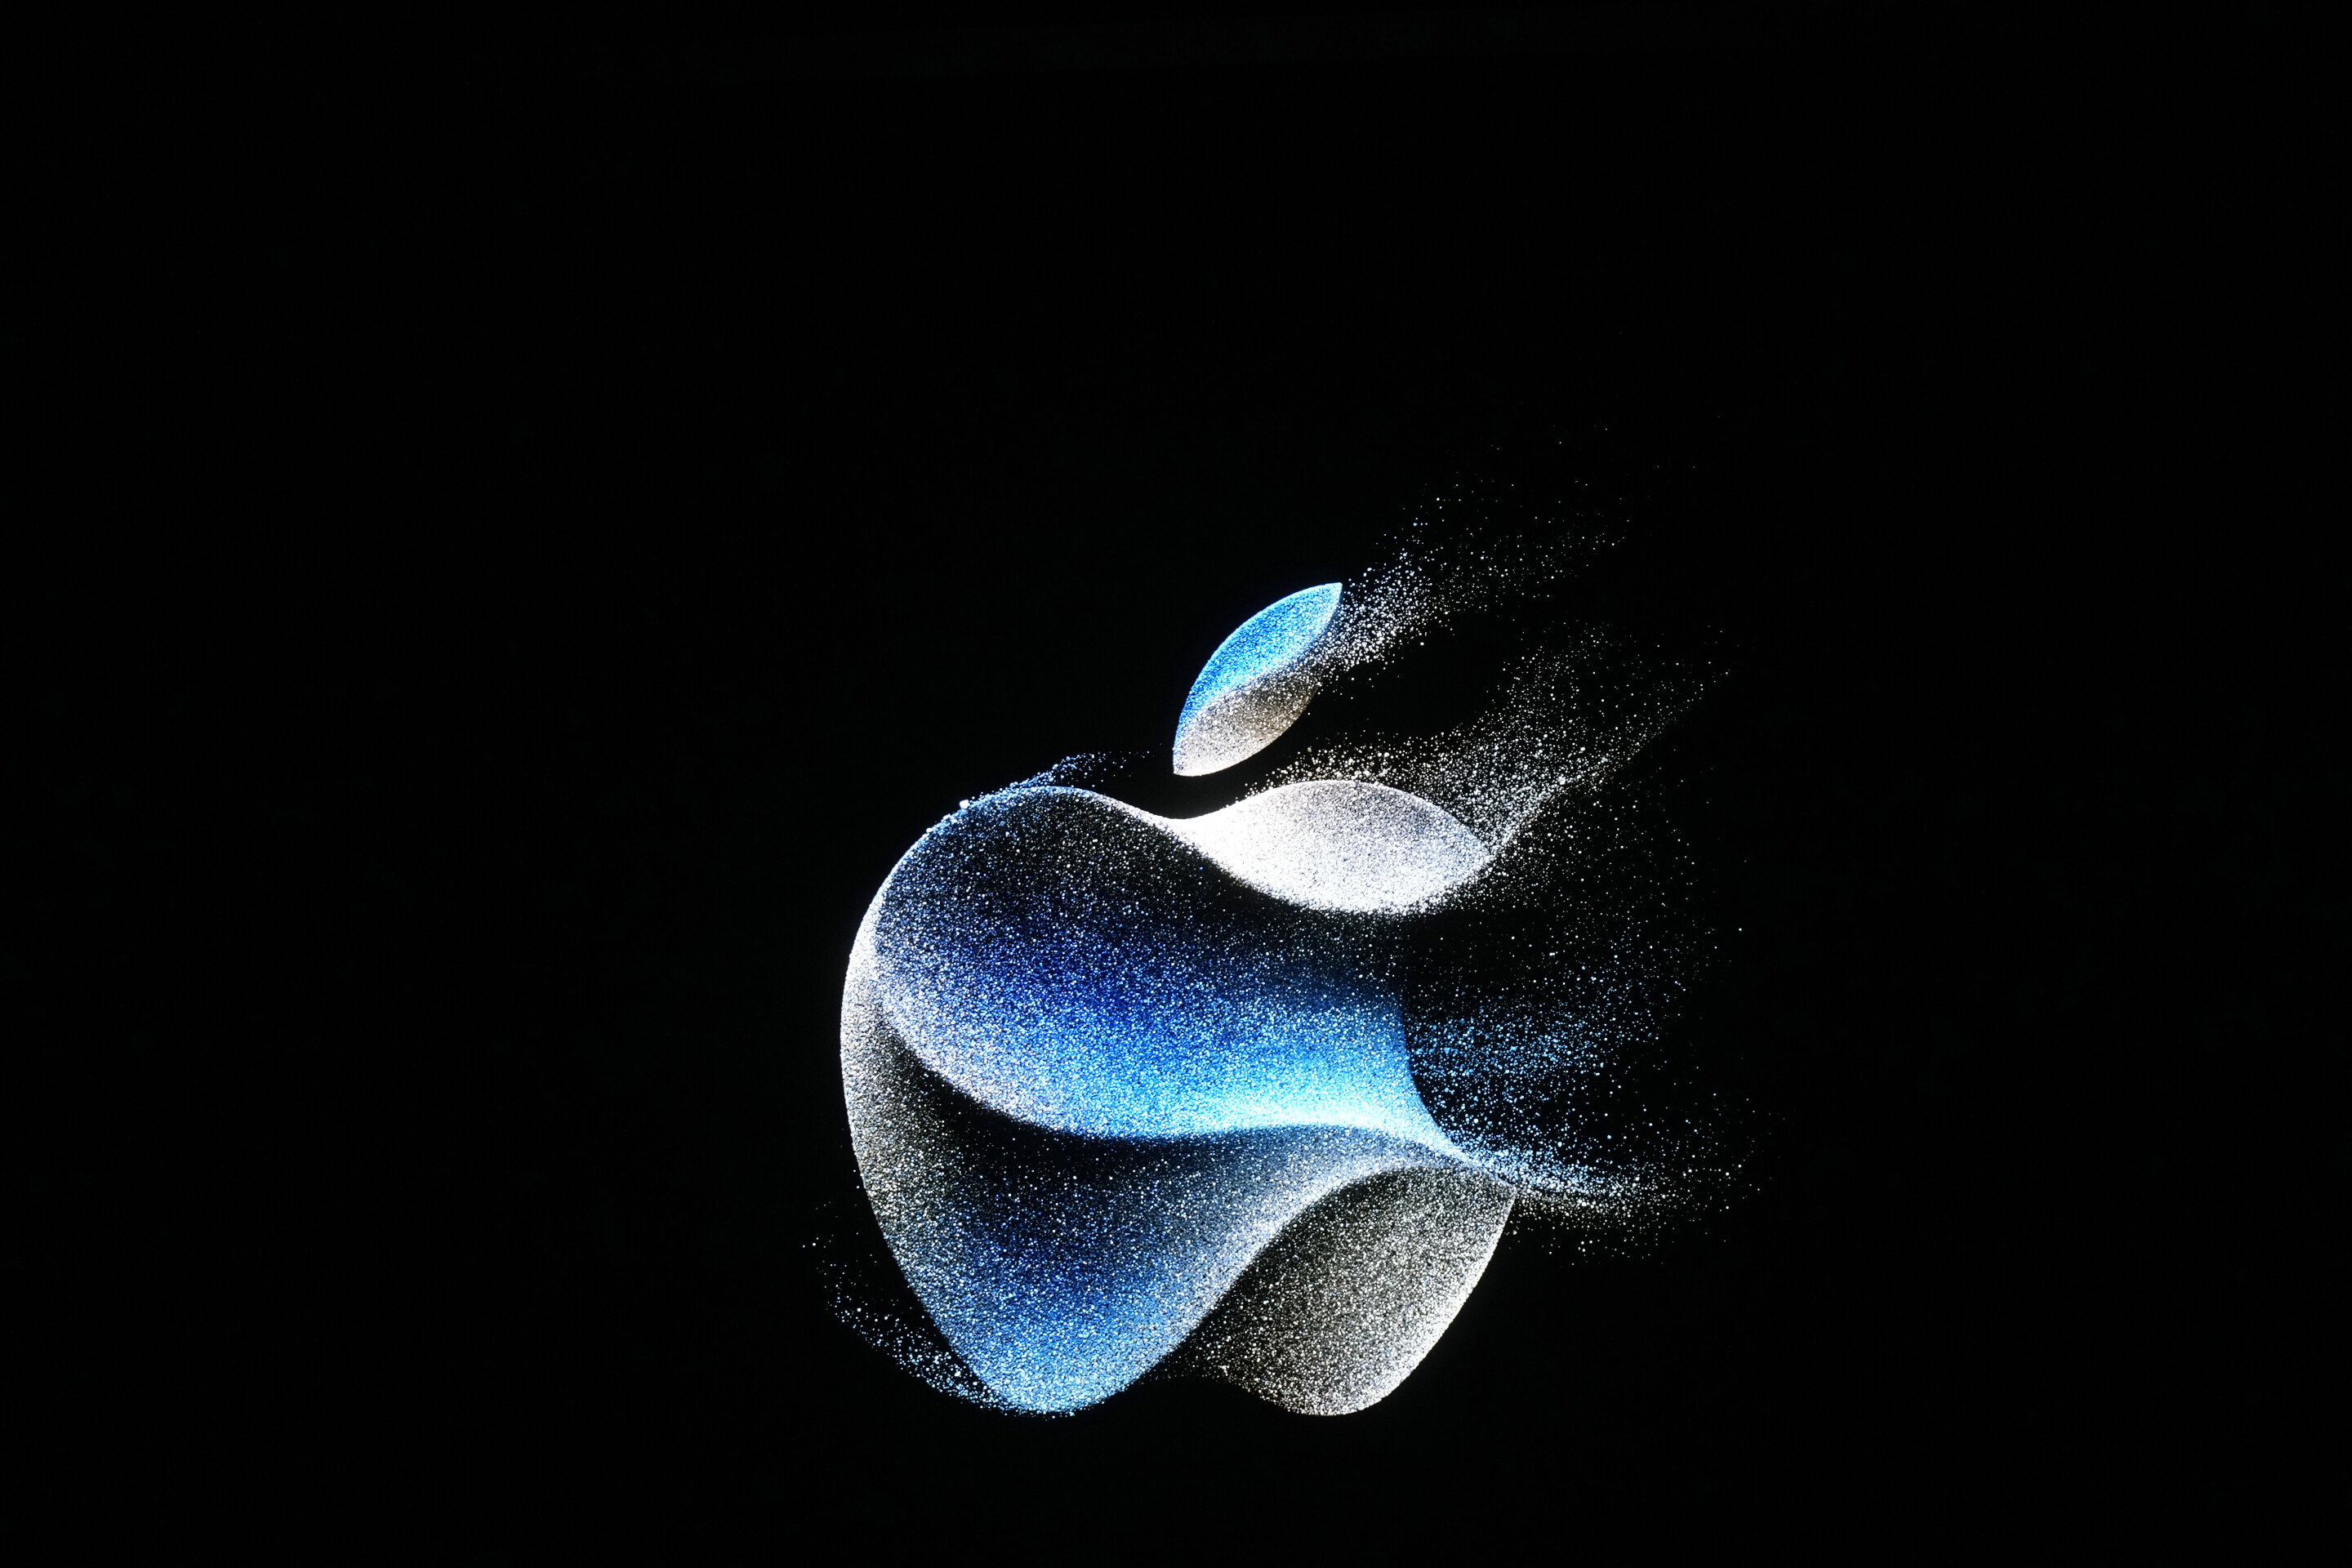 Apple iPhone 9 launching April 15, new rumor says - revü